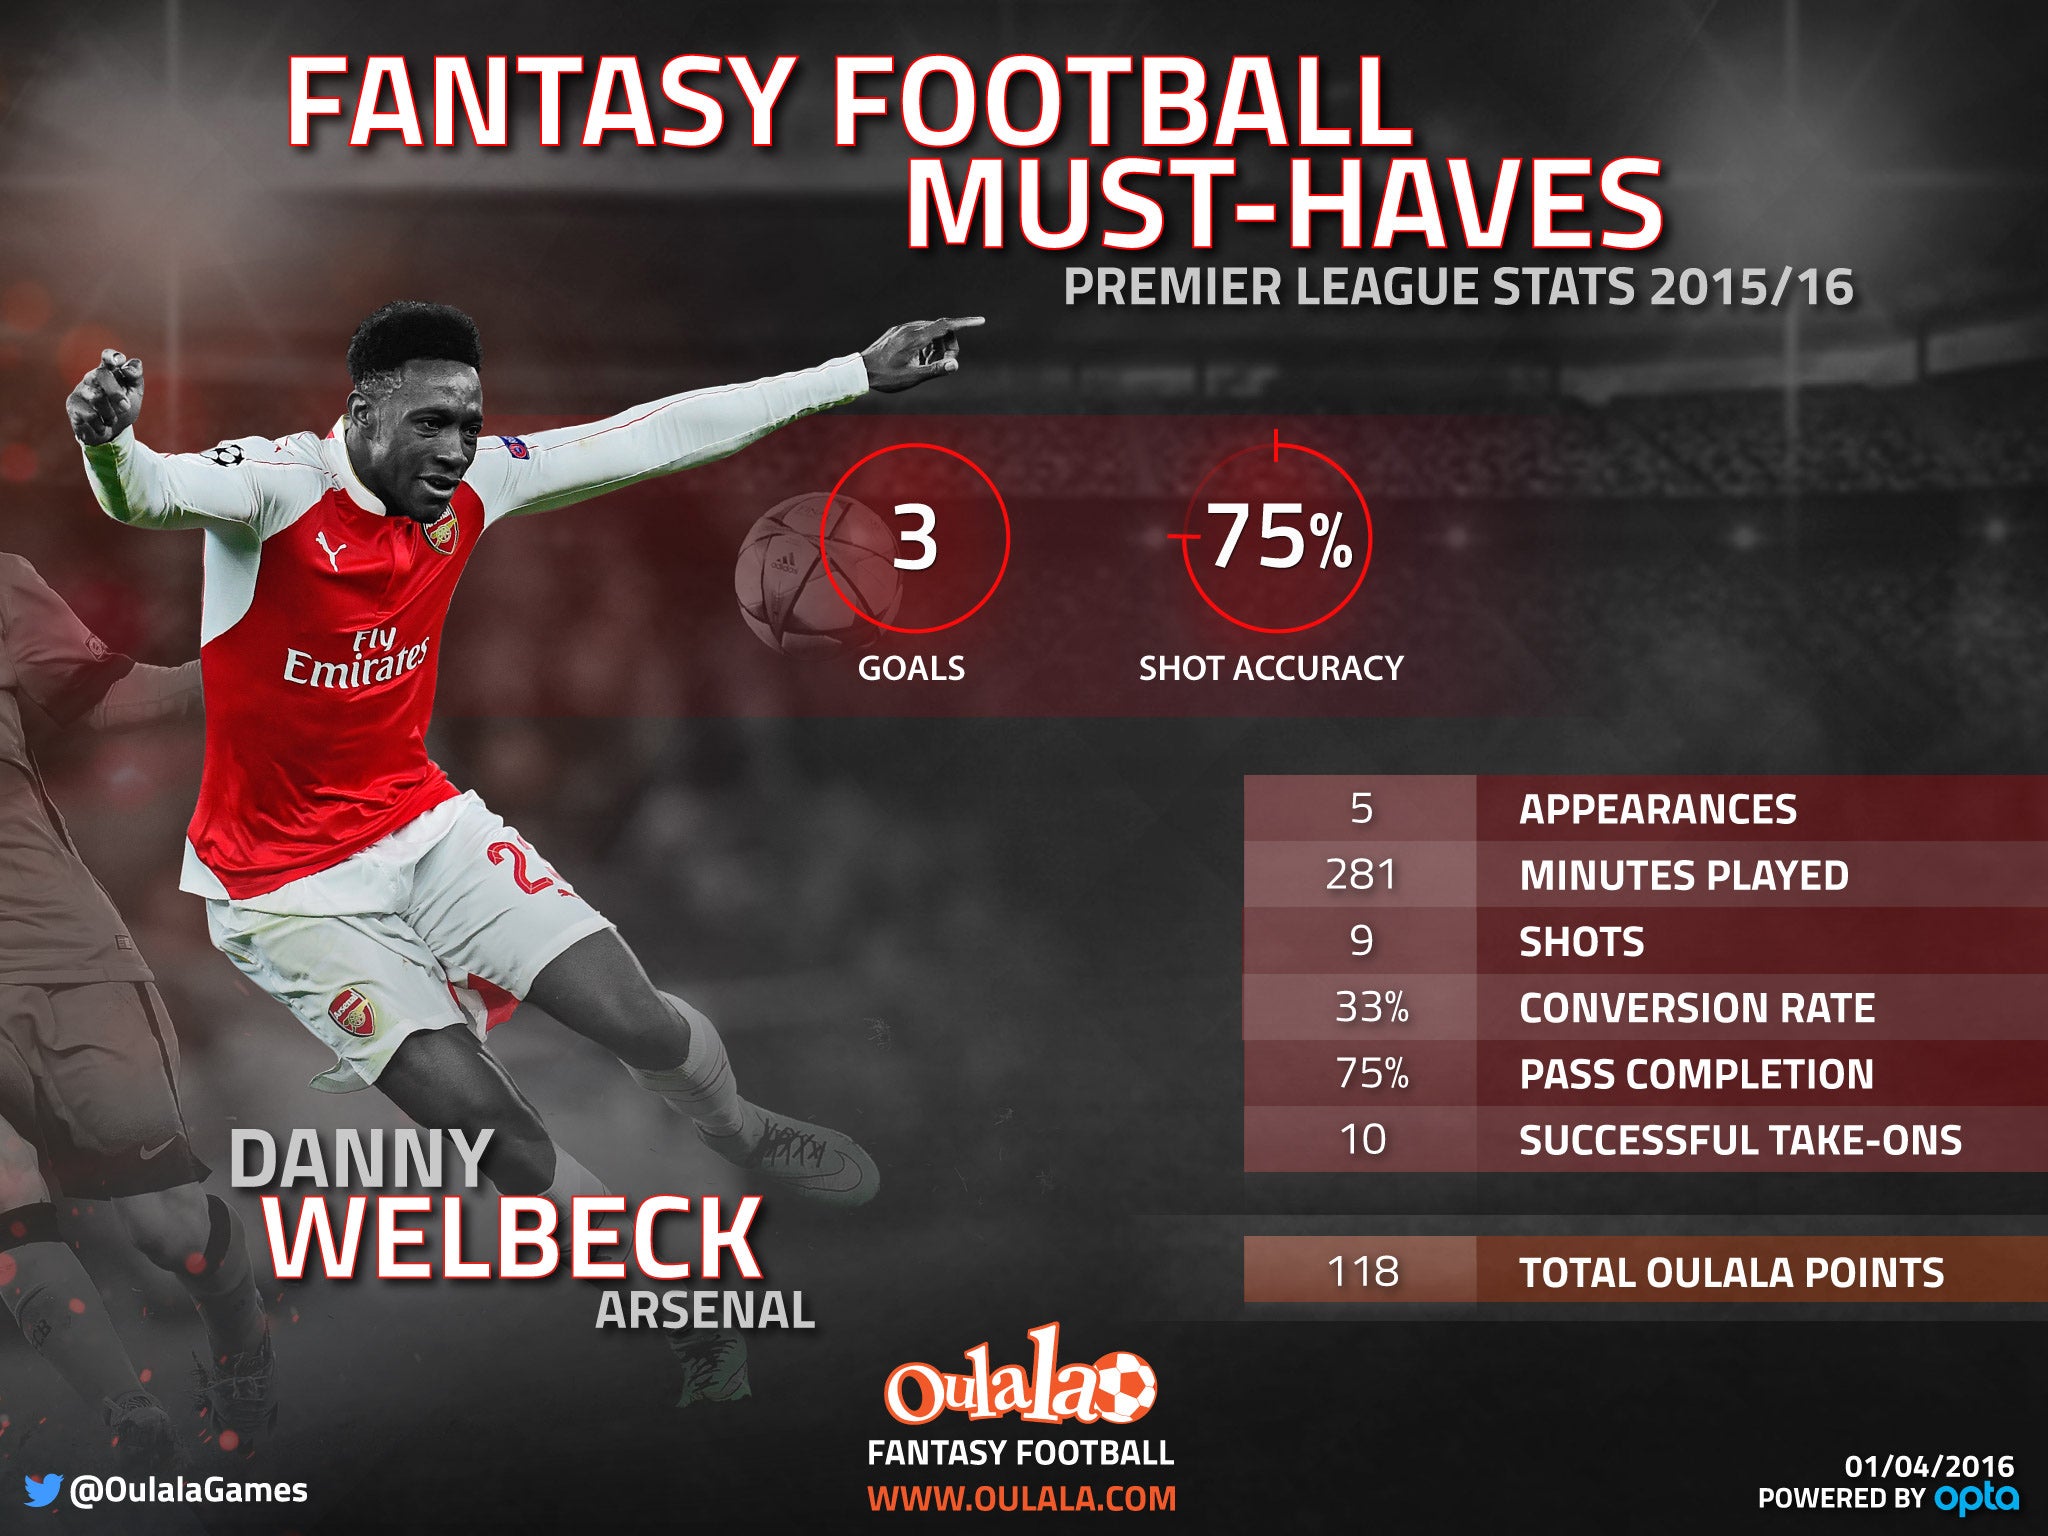 Arsenal striker Danny Welbeck's vital statistics